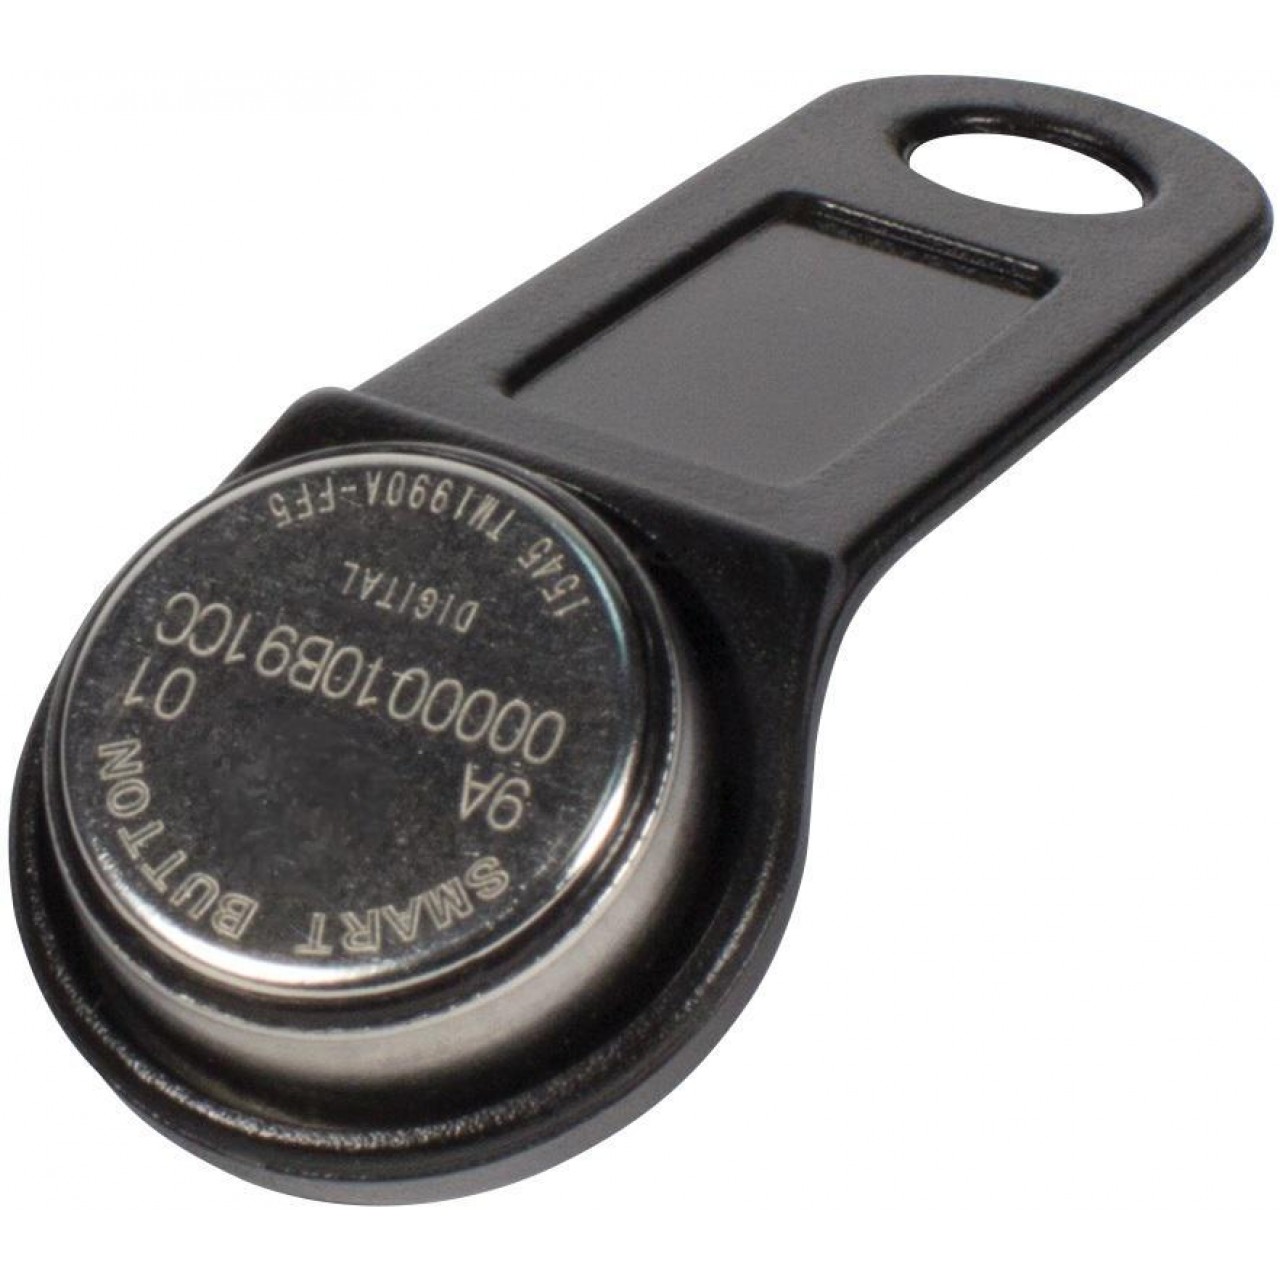 Ключ электронный Touch Memory с держателем DS 1990А-F5 (черный)